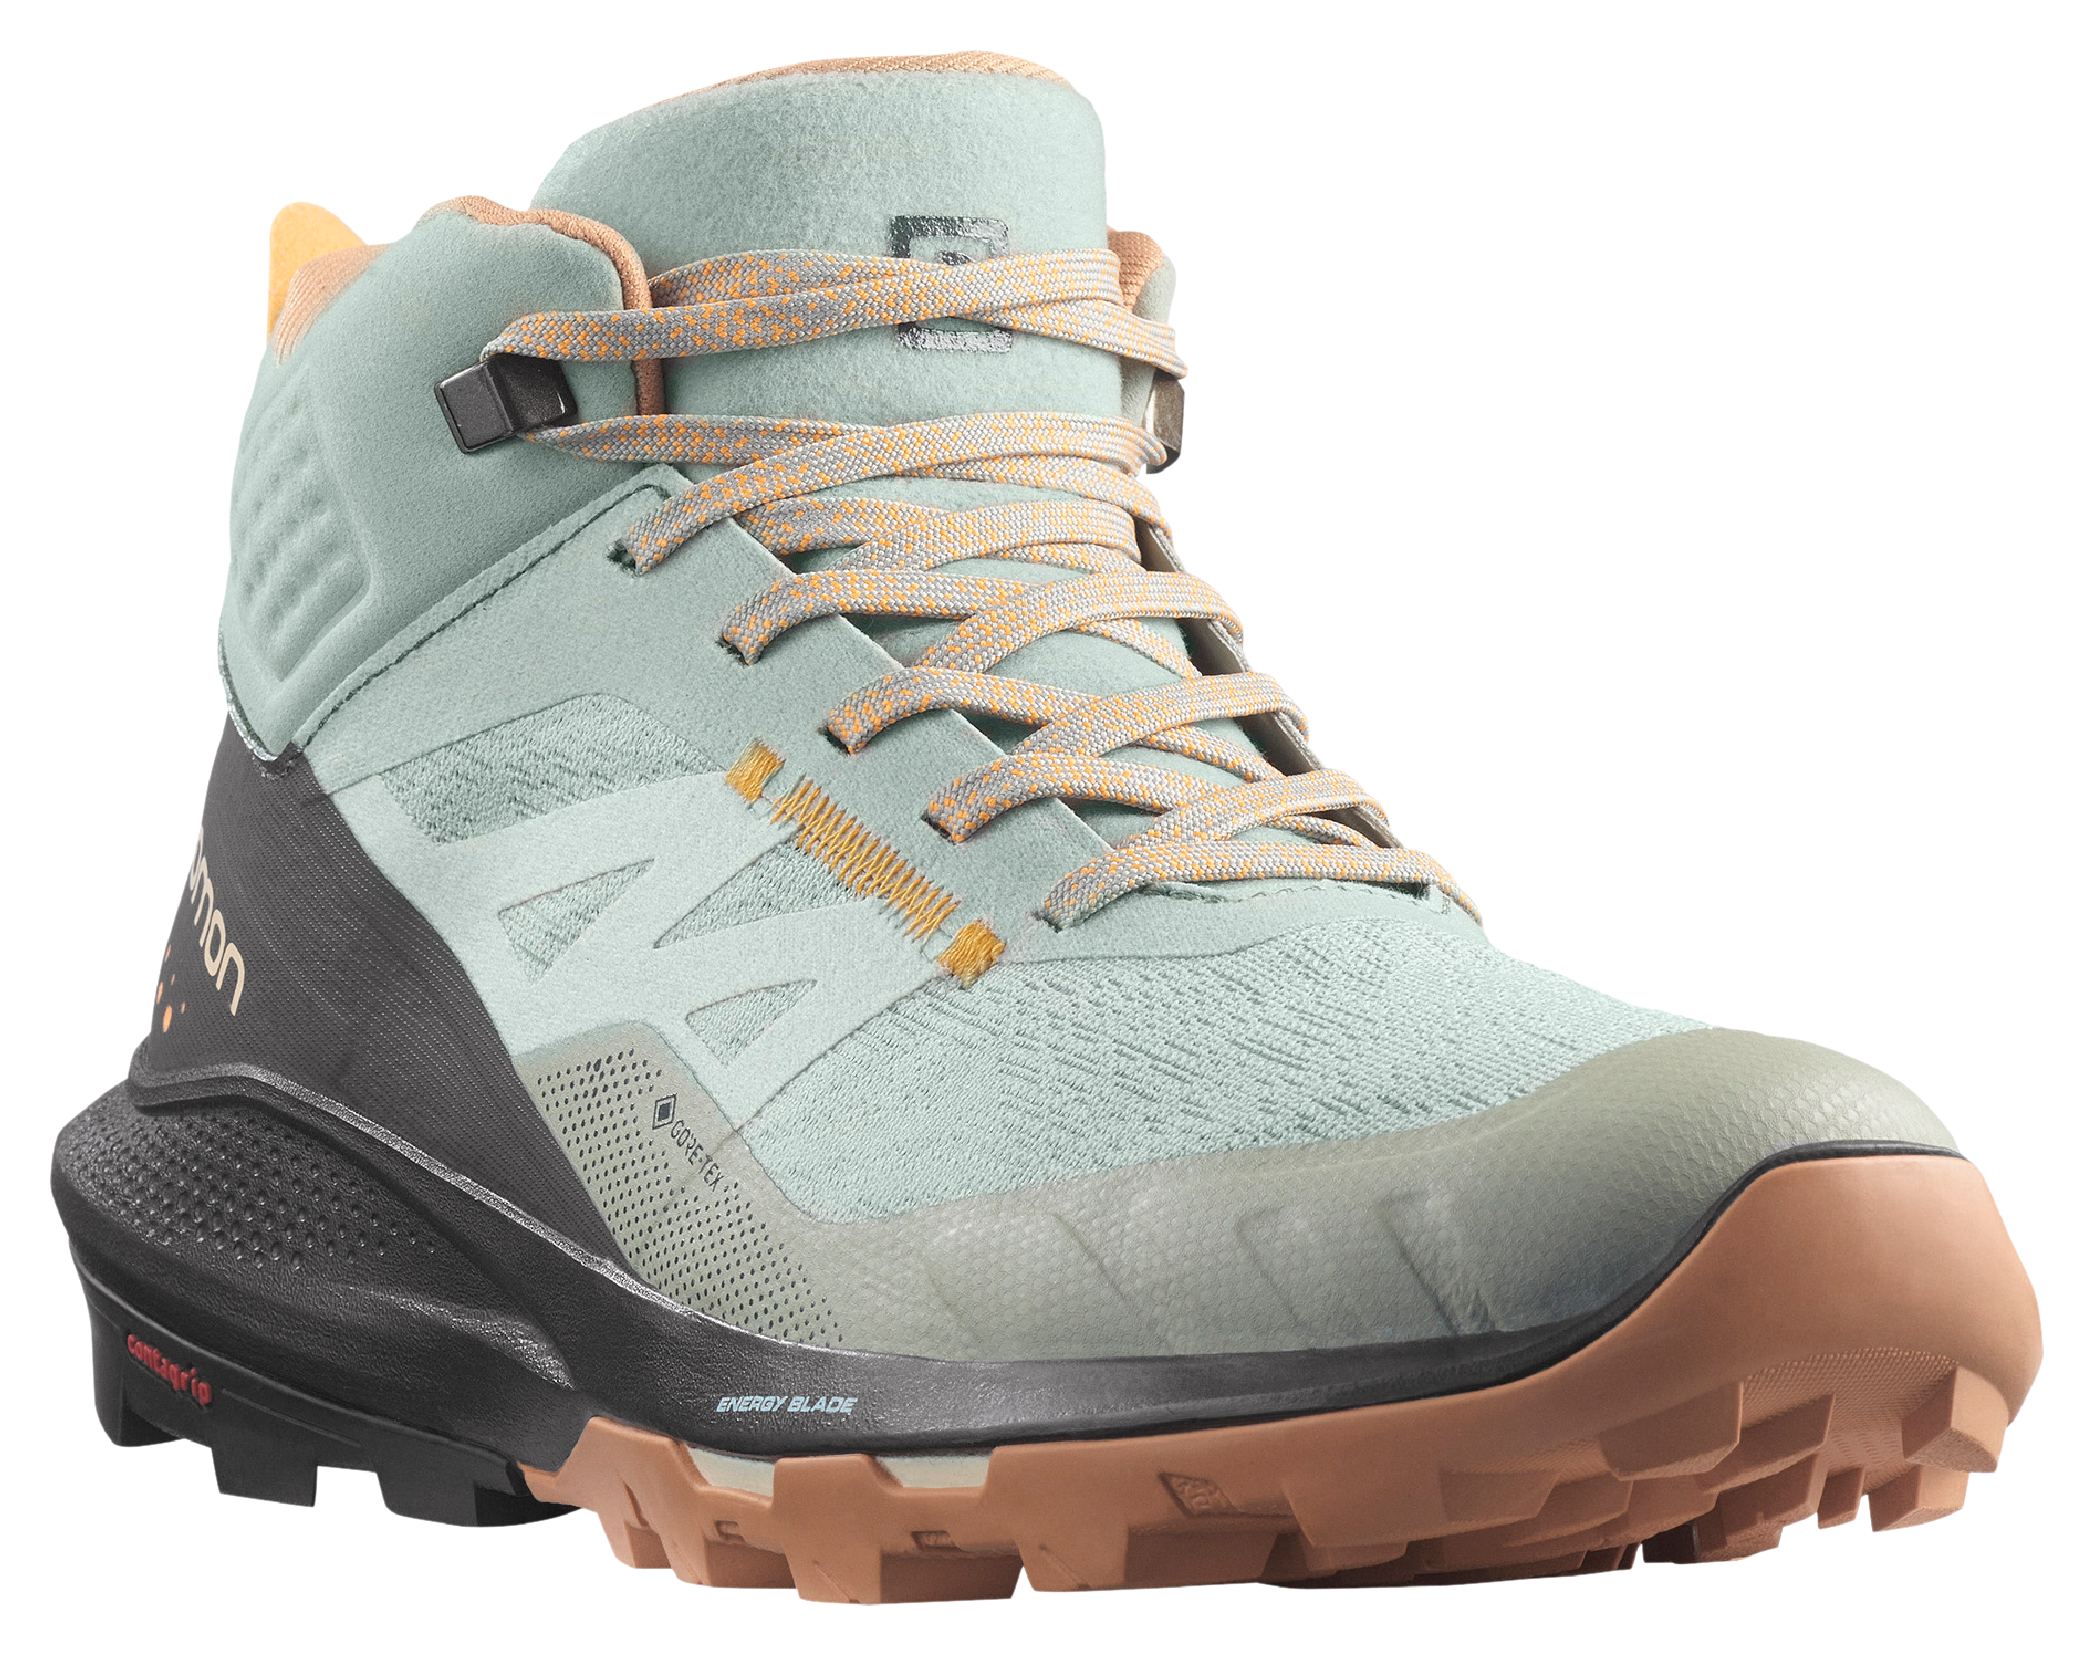 Salomon Outpulse Mid GORE-TEX Hiking Boots for Ladies - Wrought Iron/Ebony/Blaze Orange - 6.5M